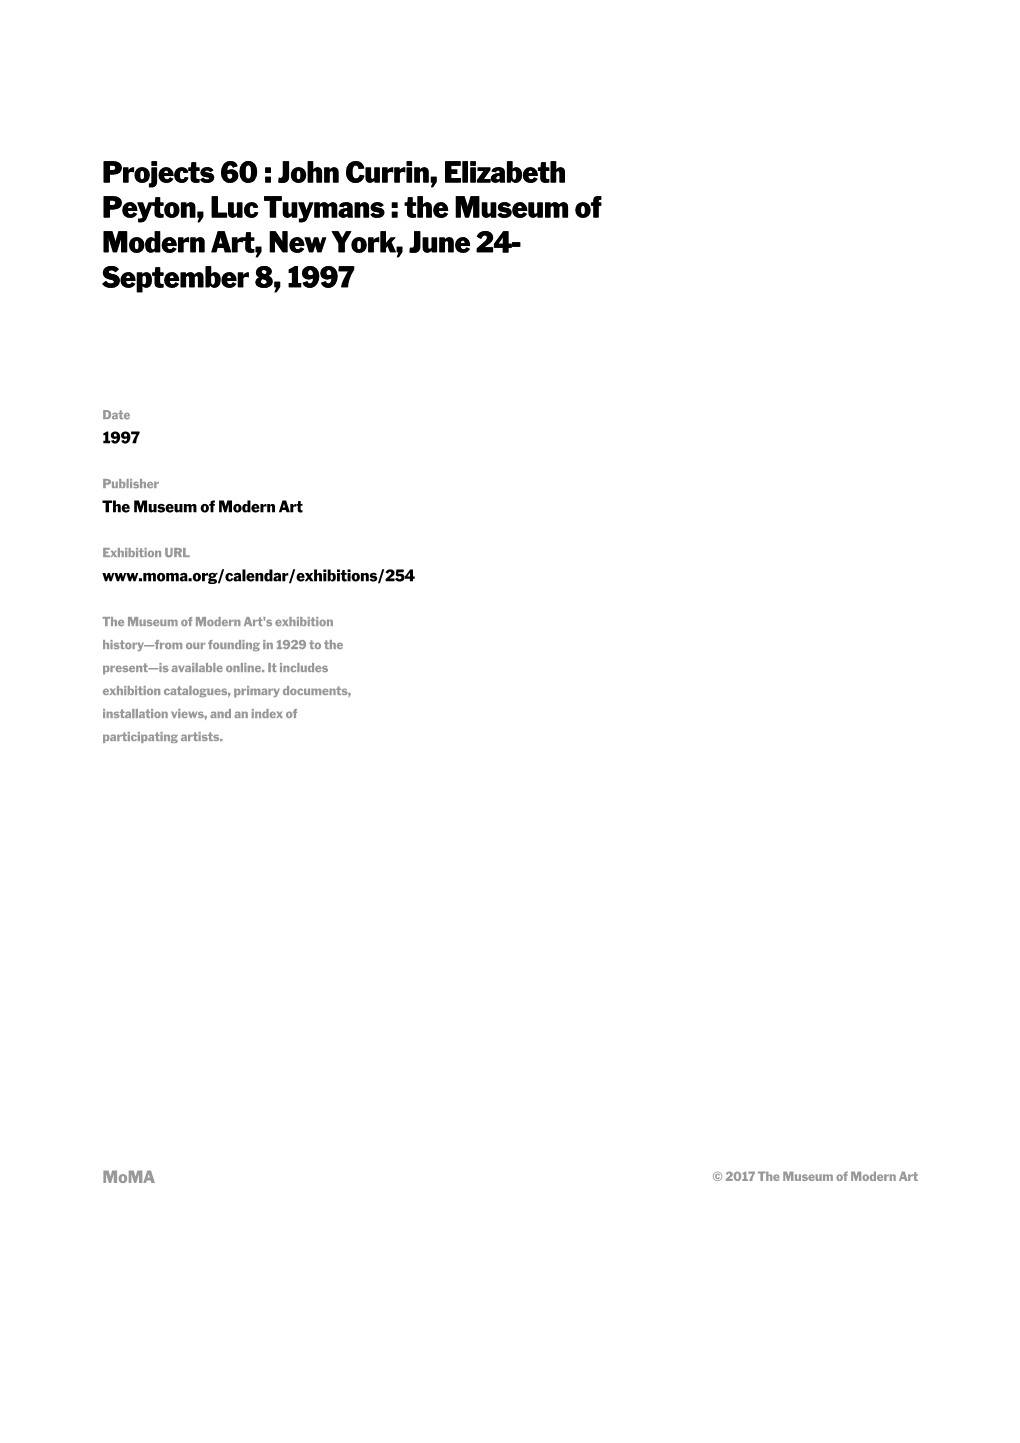 John Currin, Elizabeth Peyton, Luc Tuymans : the Museum of Modern Art, New York, June 24- September 8, 1997